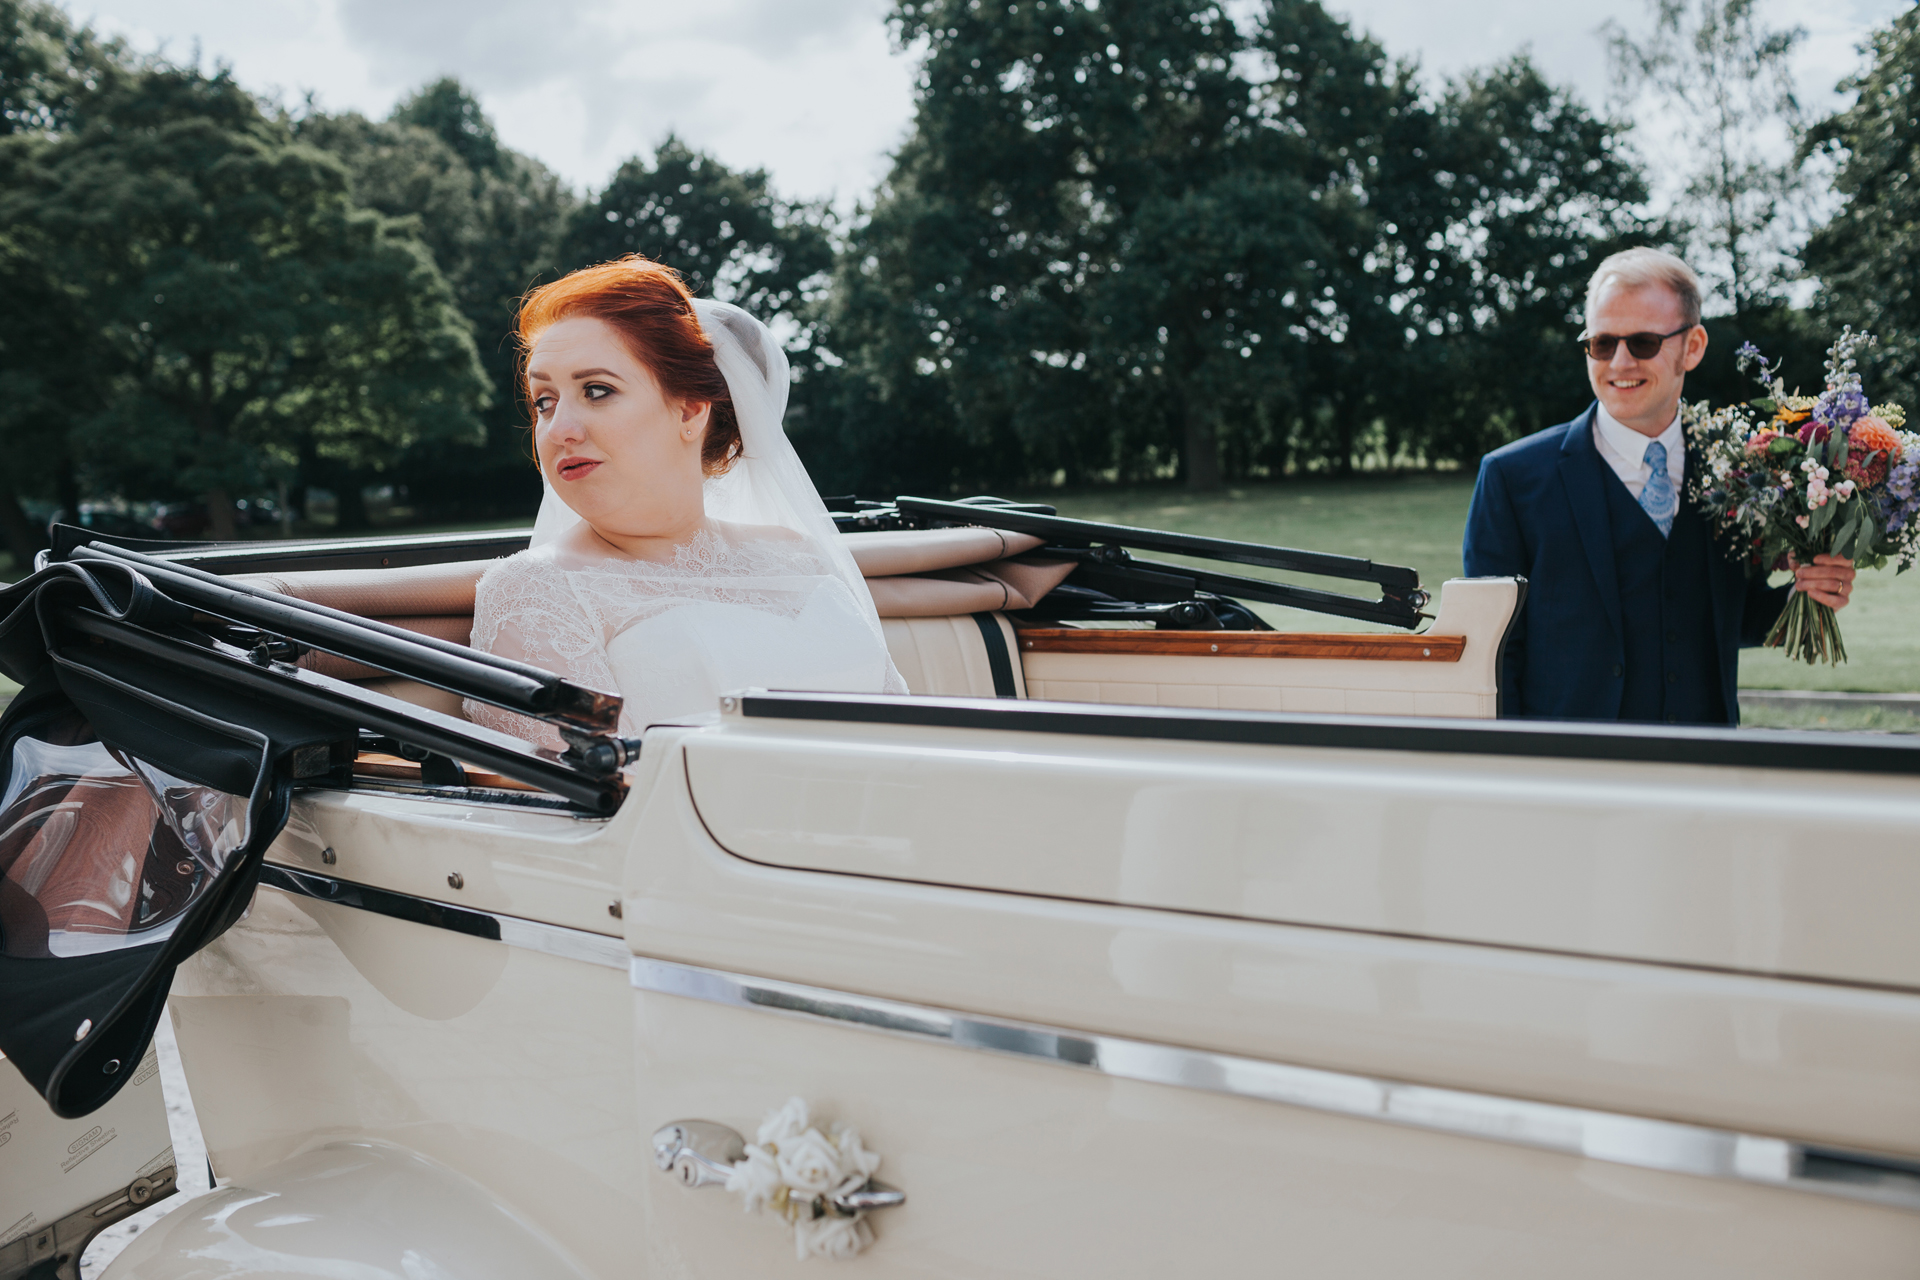 Bride and groom arrive at Trafford hall in their wedding car. 